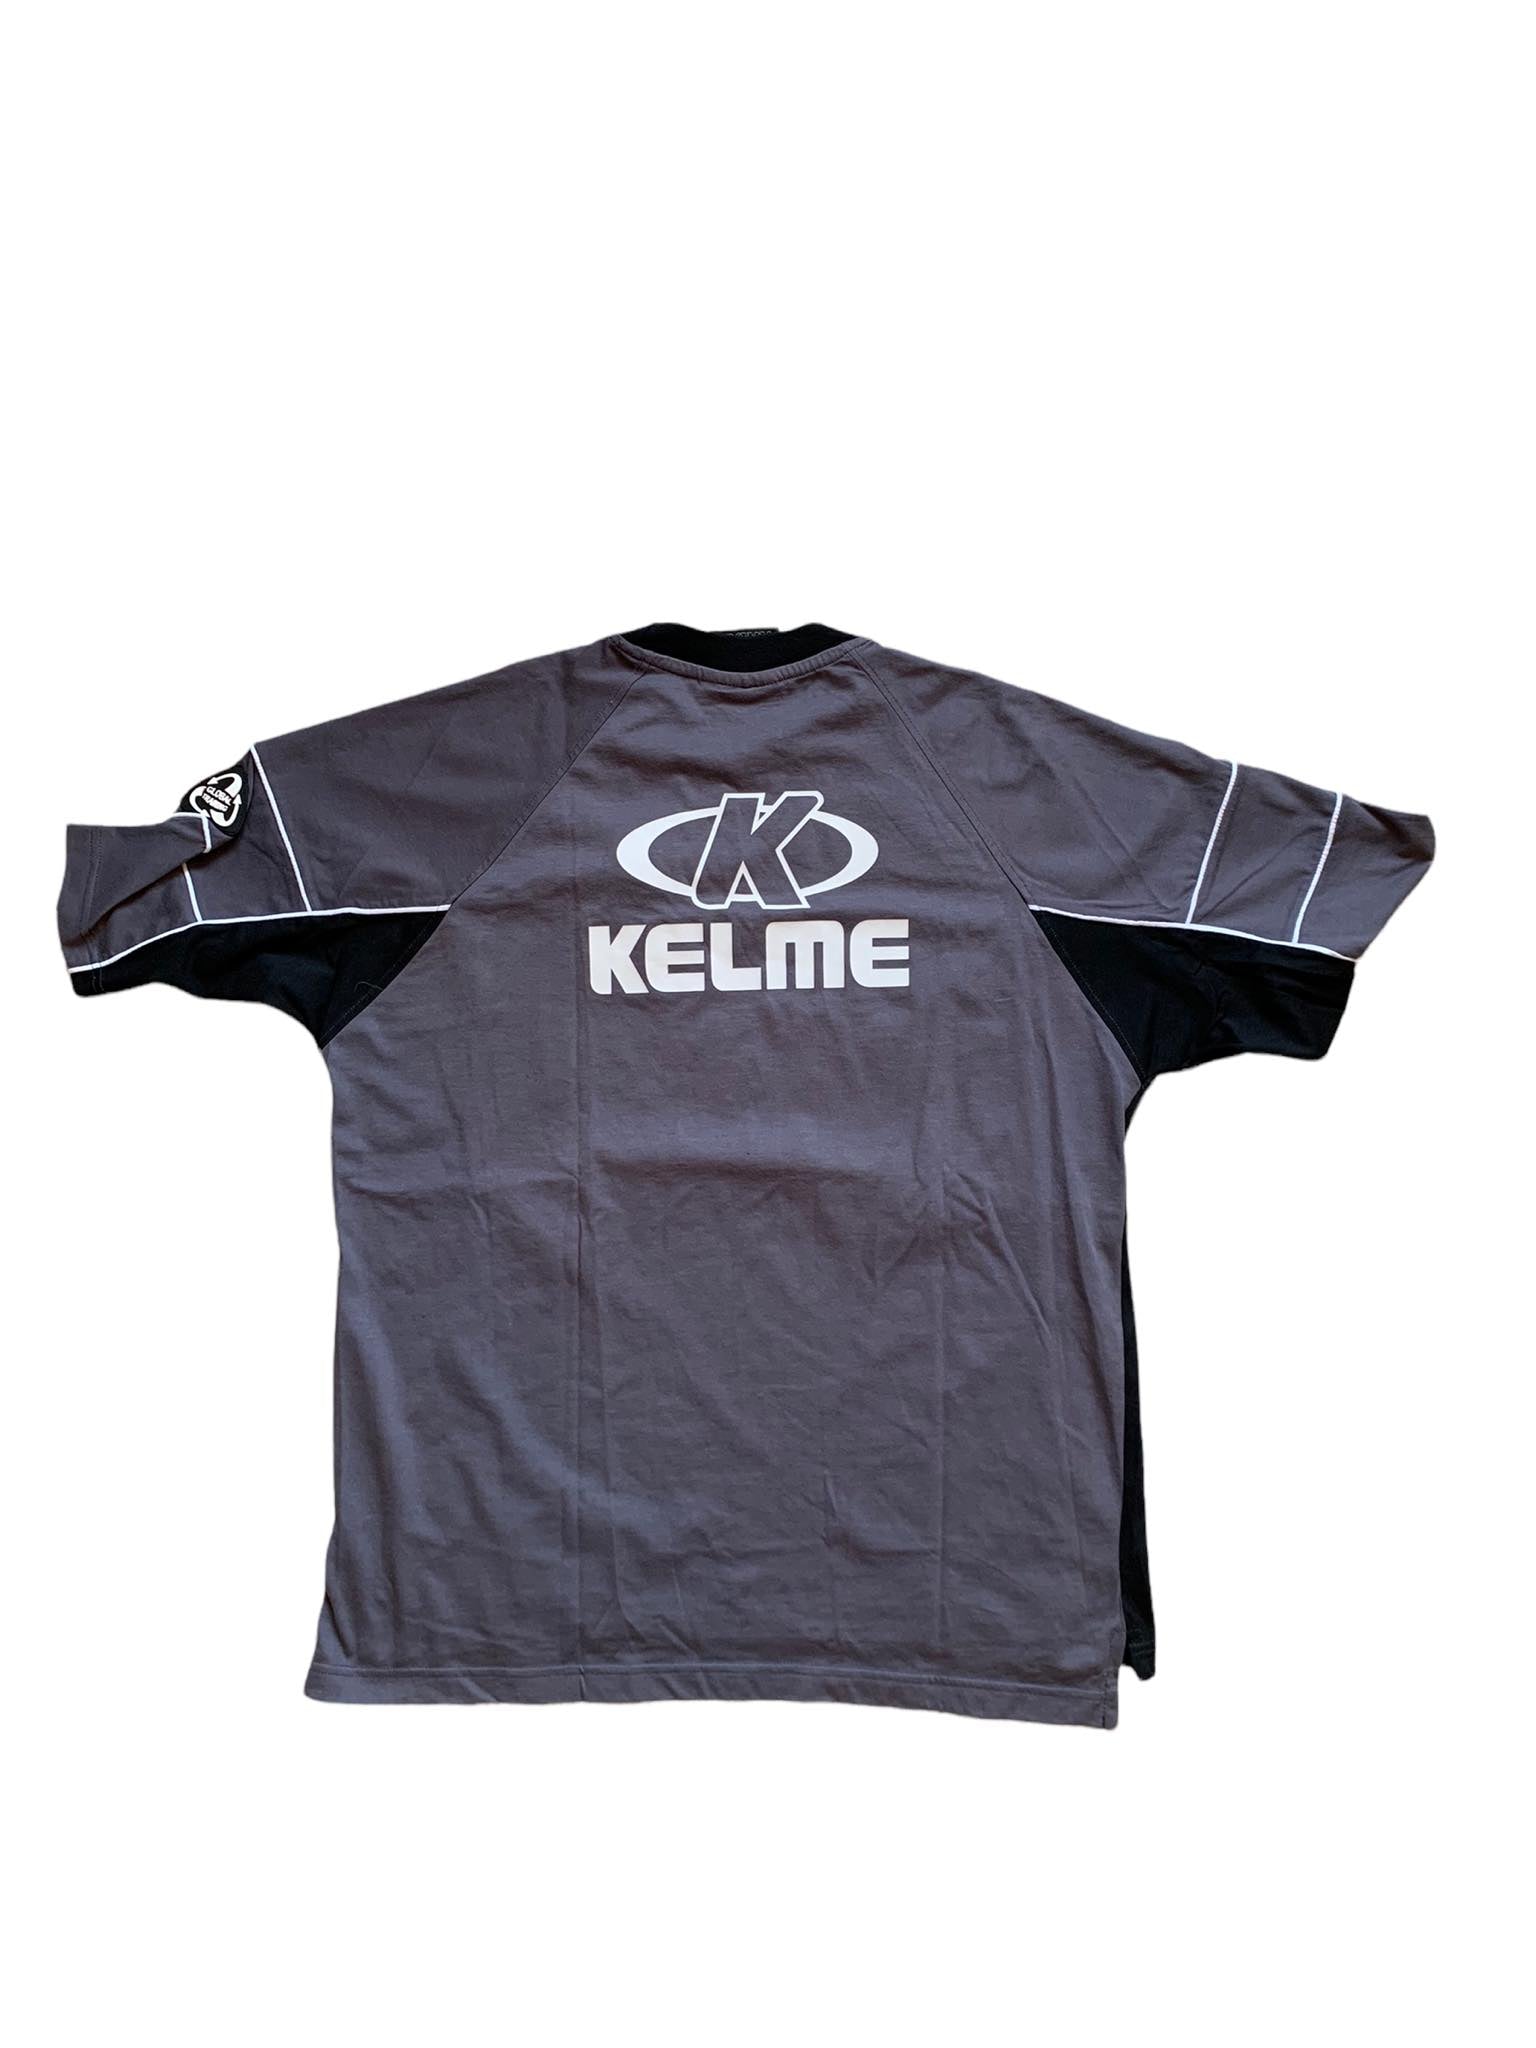 Venezia 2001/03 Leisure Kelme T-Shirt (M) - KITLAUNCH